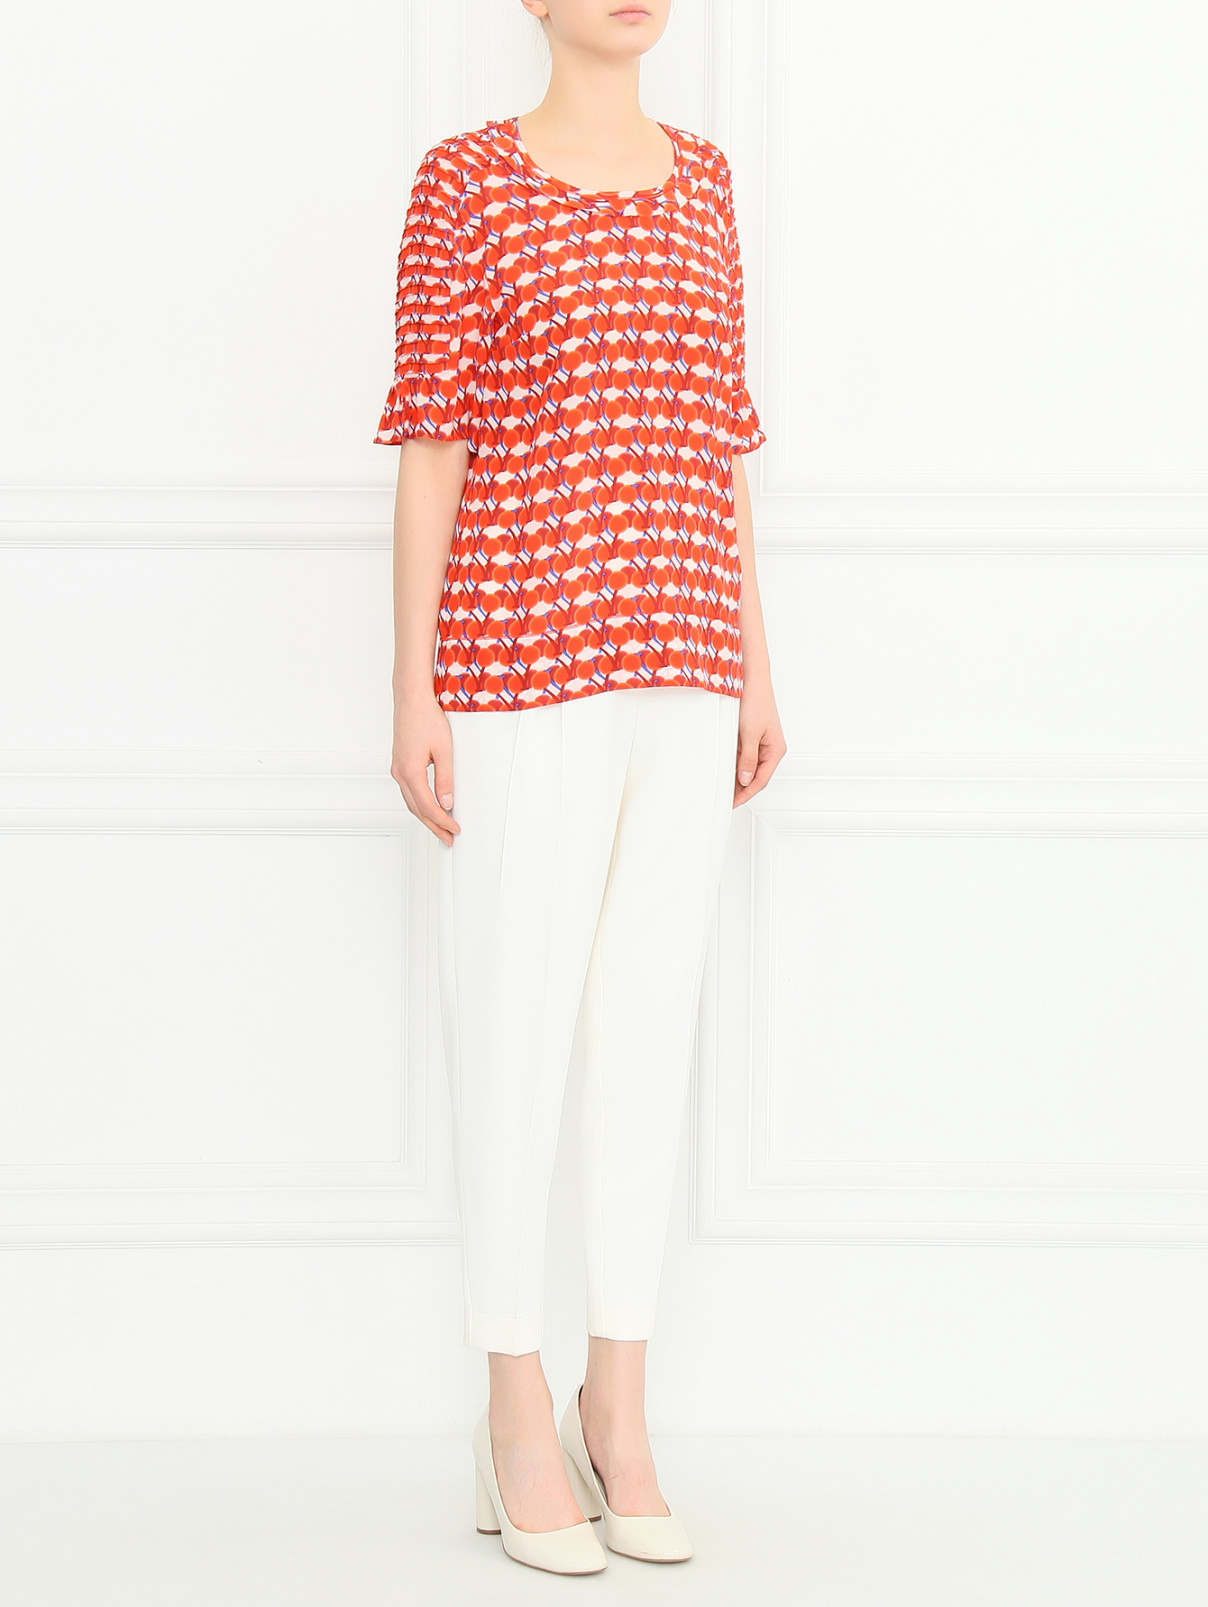 Блуза из шелка с узором Sonia Rykiel  –  Модель Общий вид  – Цвет:  Узор